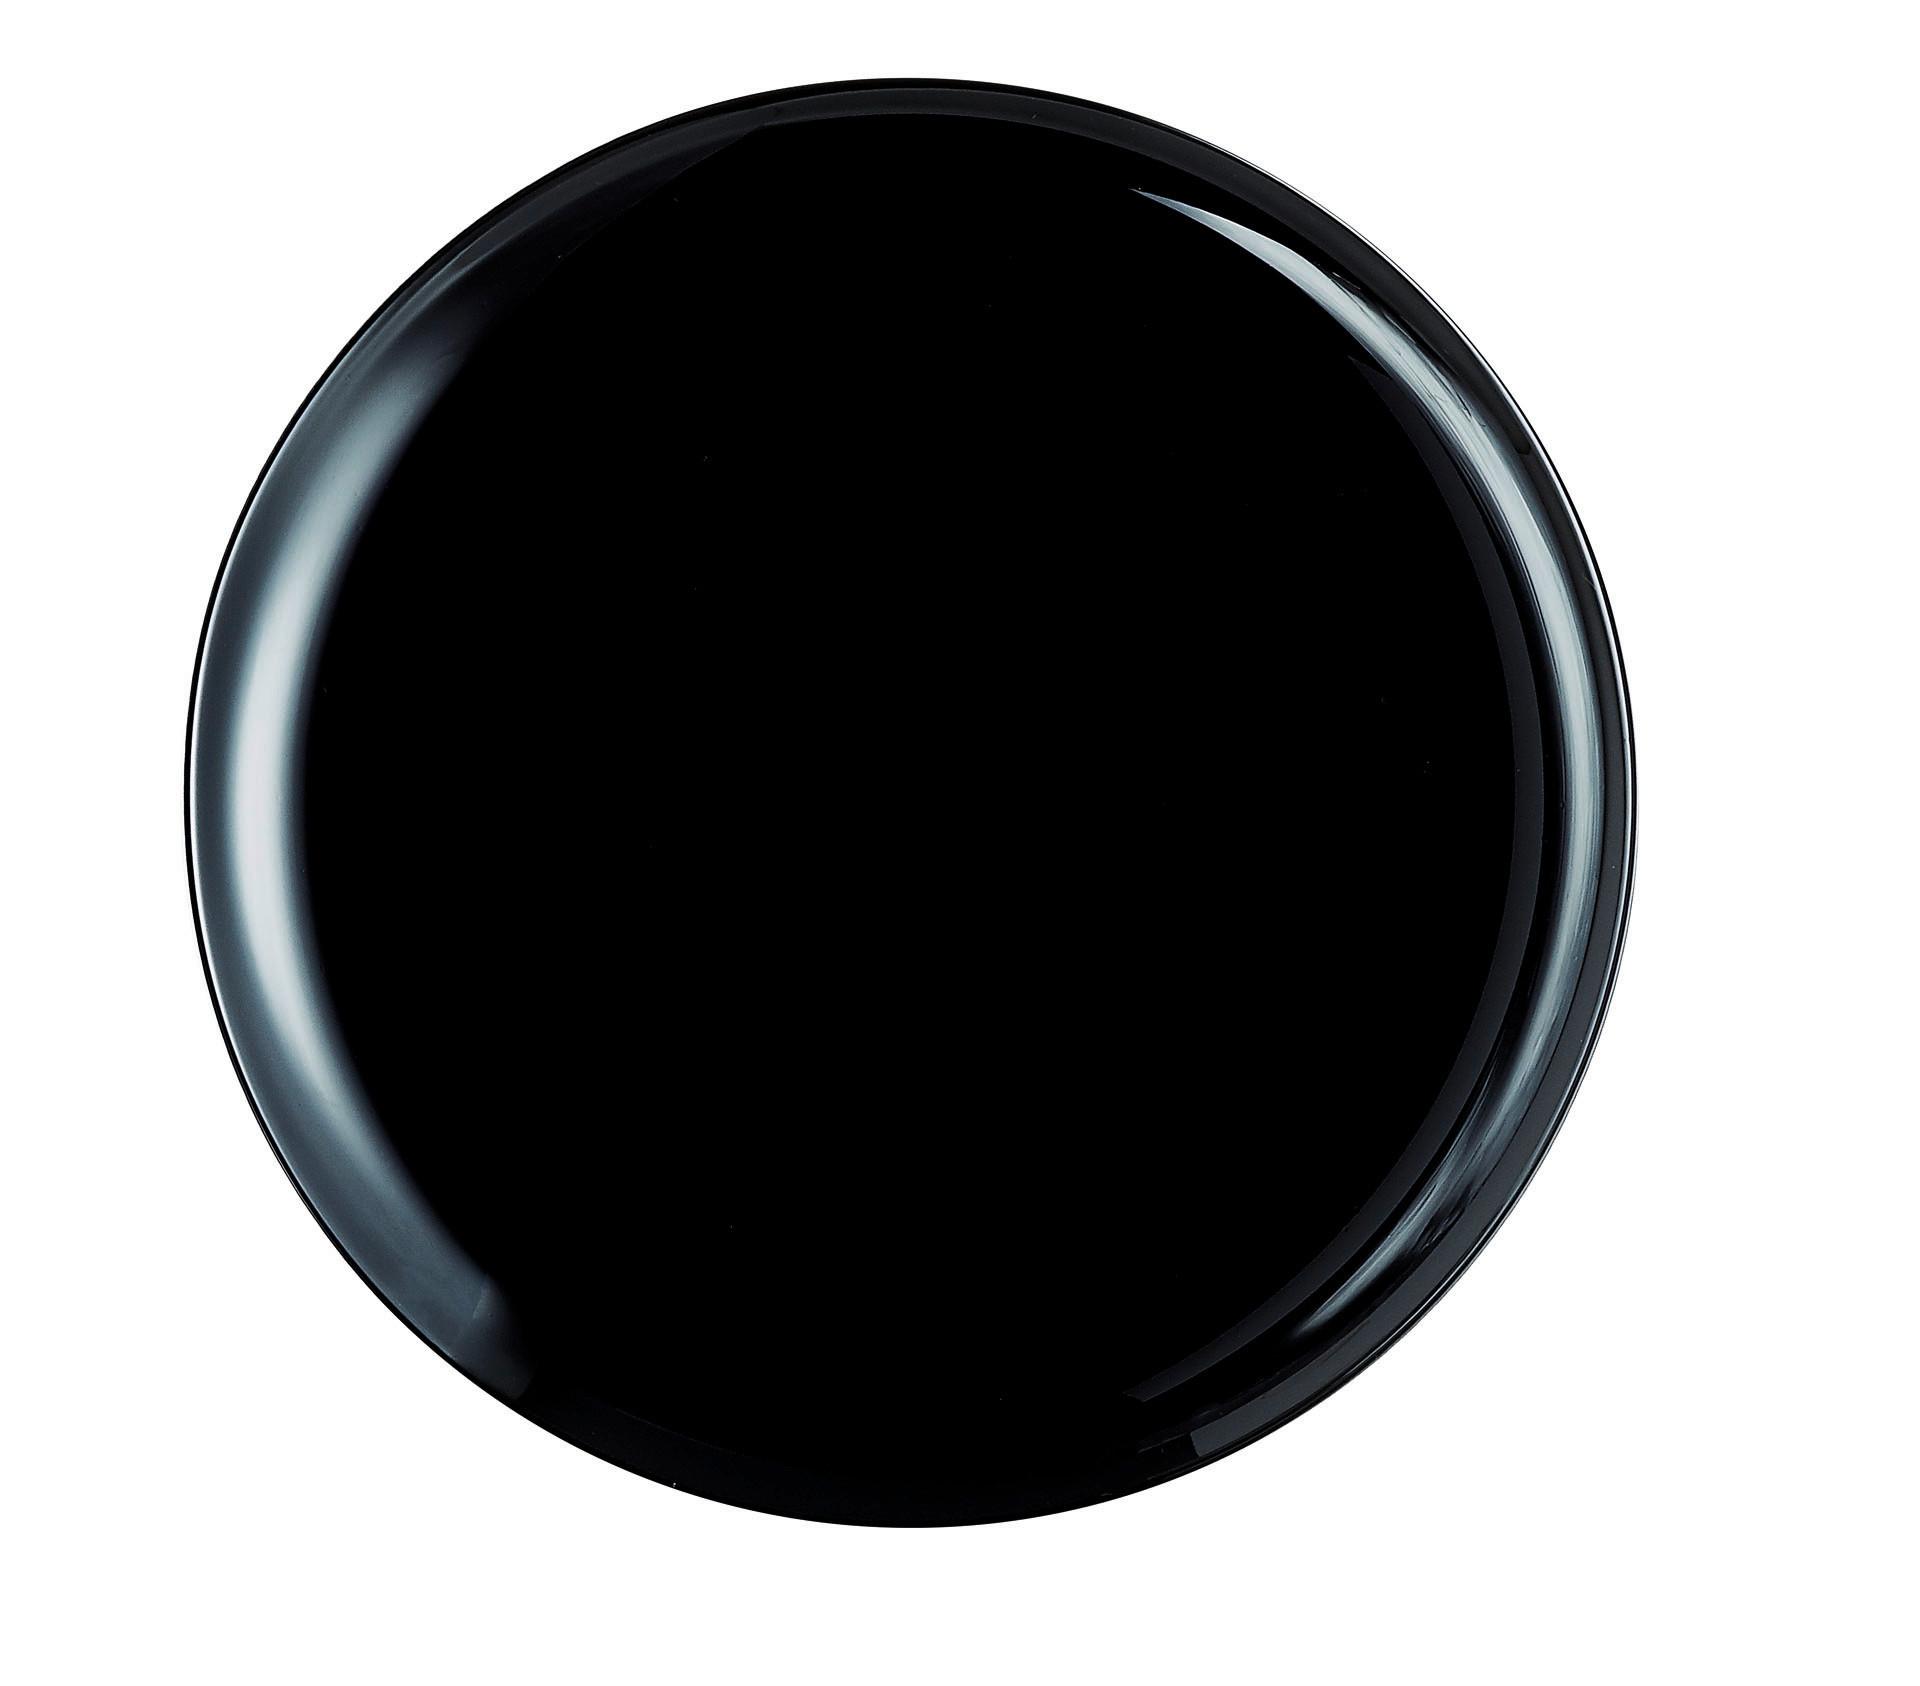 Talíř Na Pizzu Brigitte Black - černá, Konvenční, sklo (32,1/2,4cm) - Based